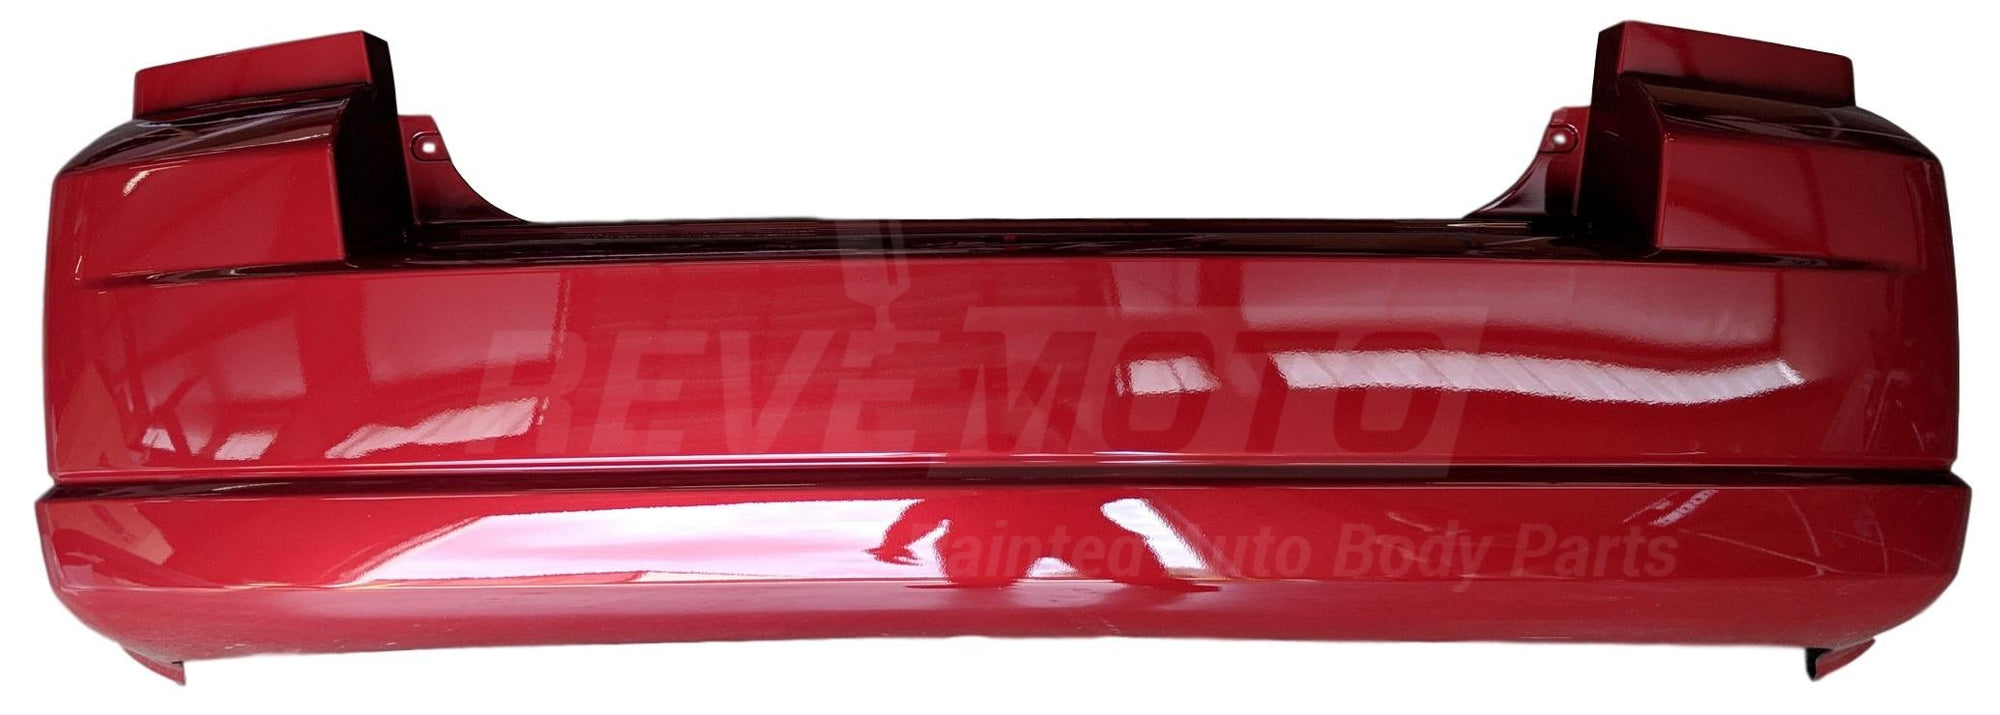 2009 Dodge Caliber : Rear Bumper Painted